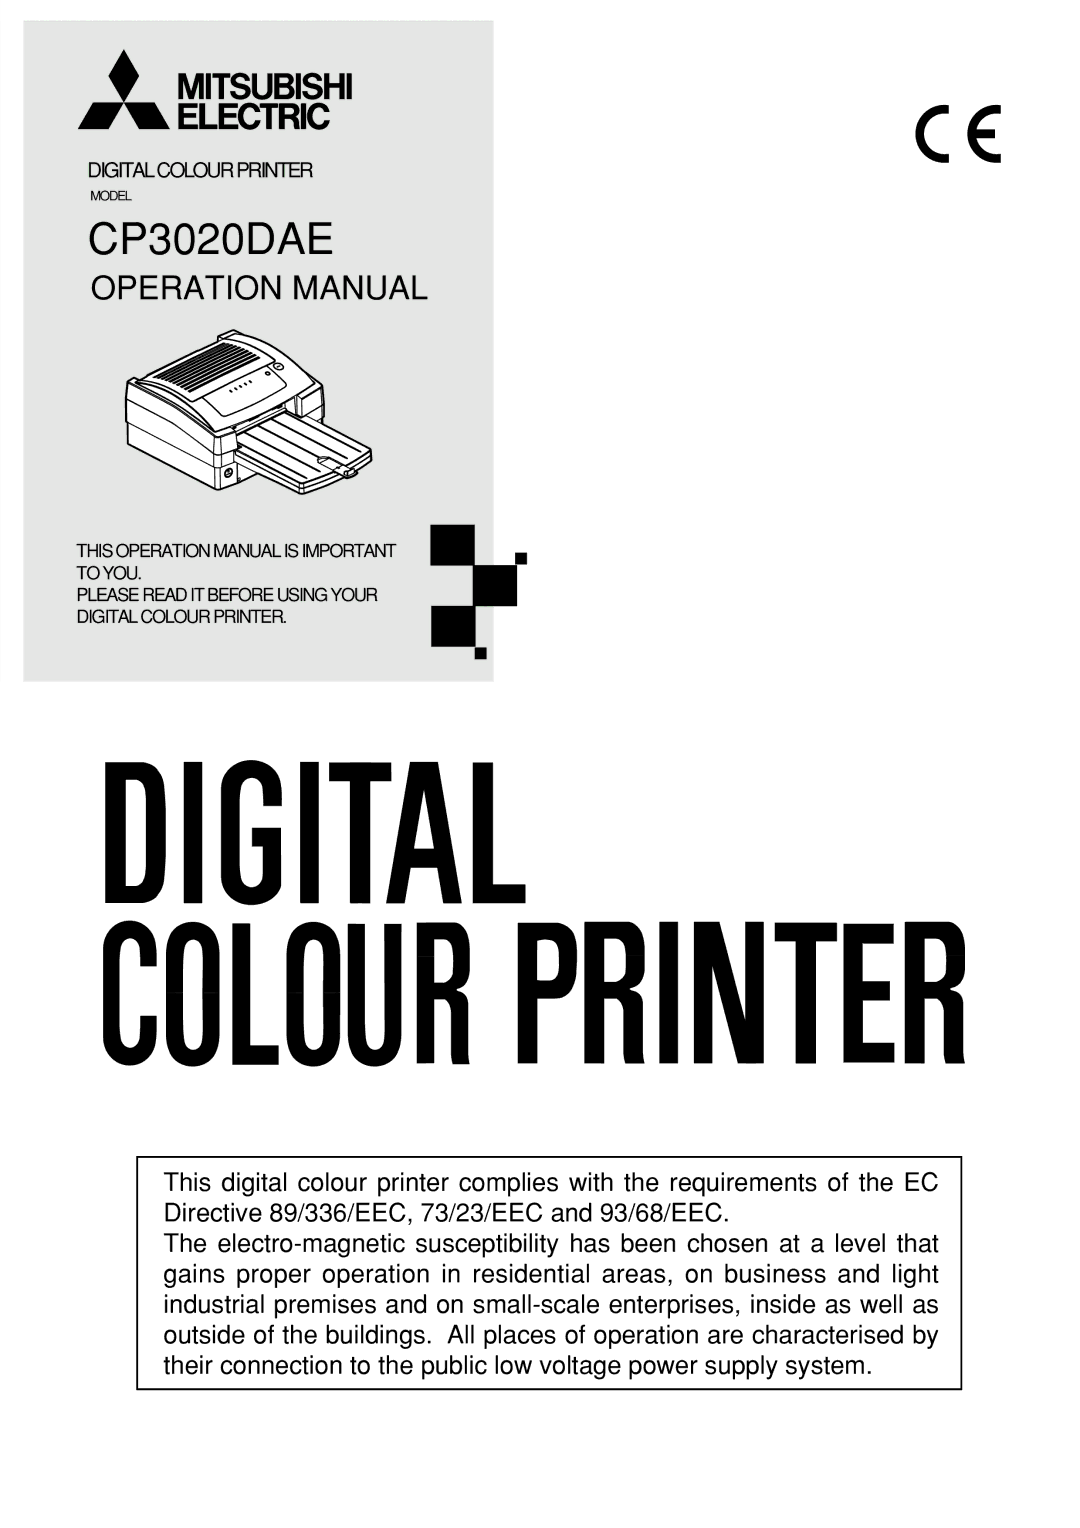 Mitsubishi Electronics CP3020DAE operation manual 